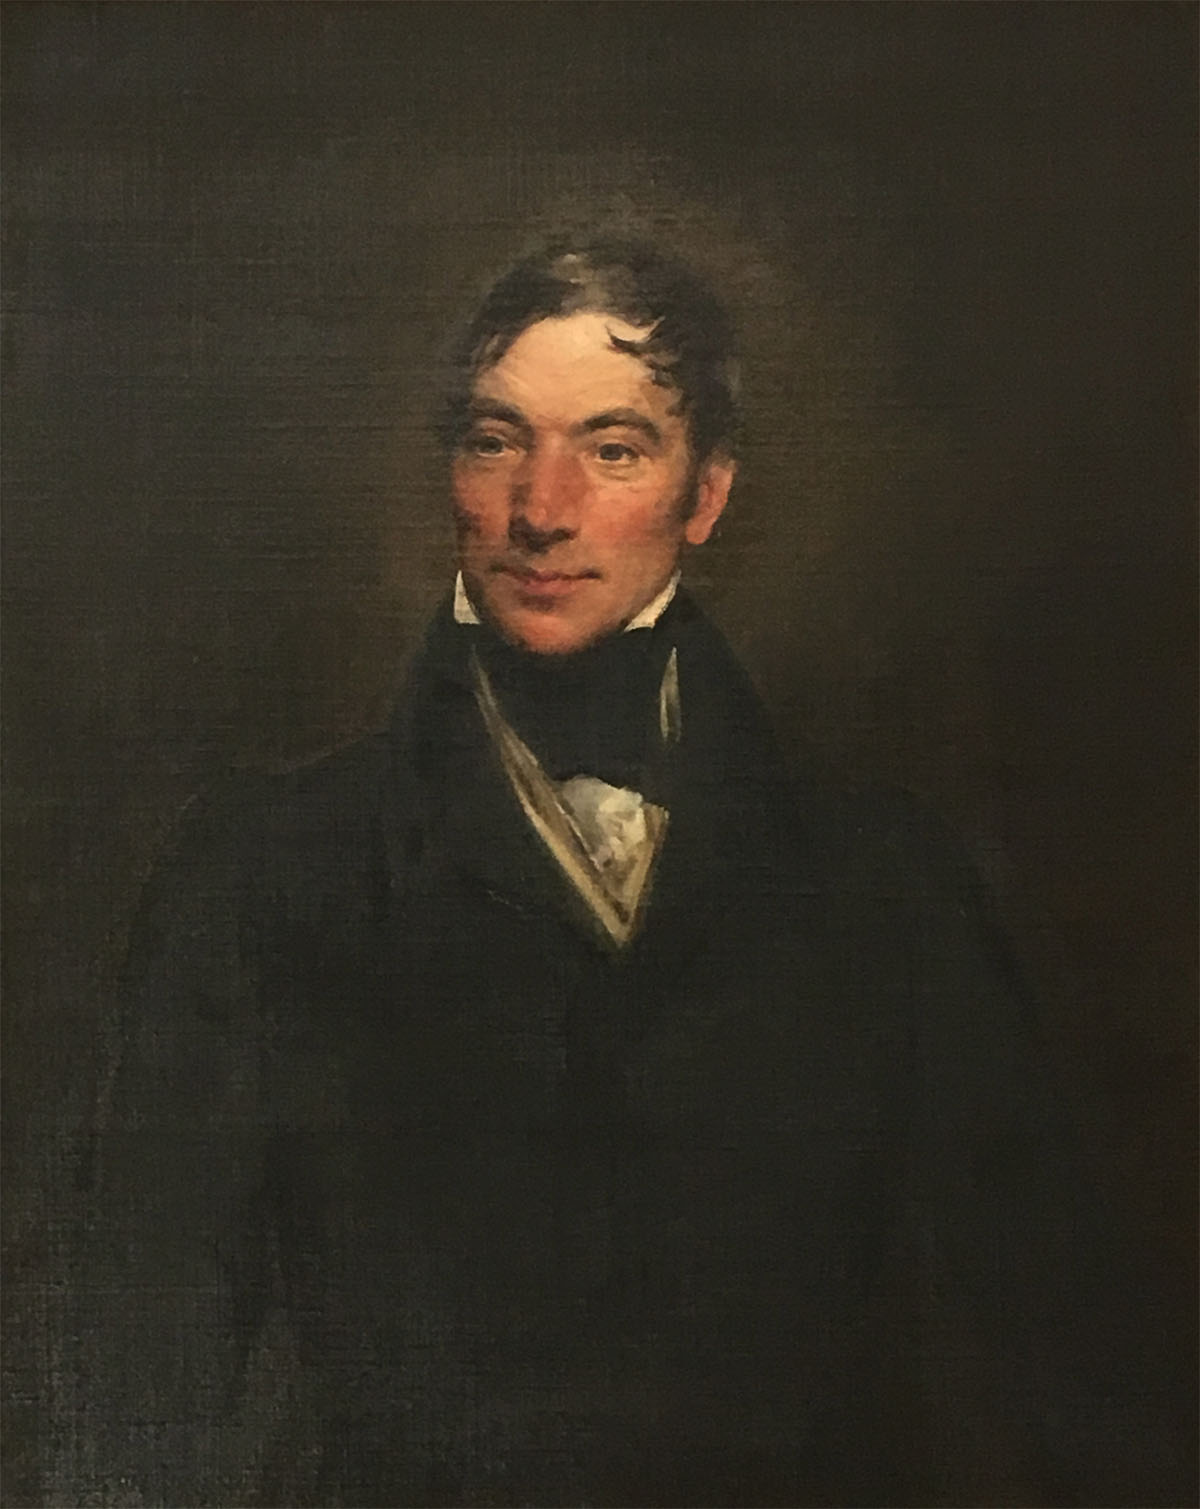 Robert Owen by William Pickersgill